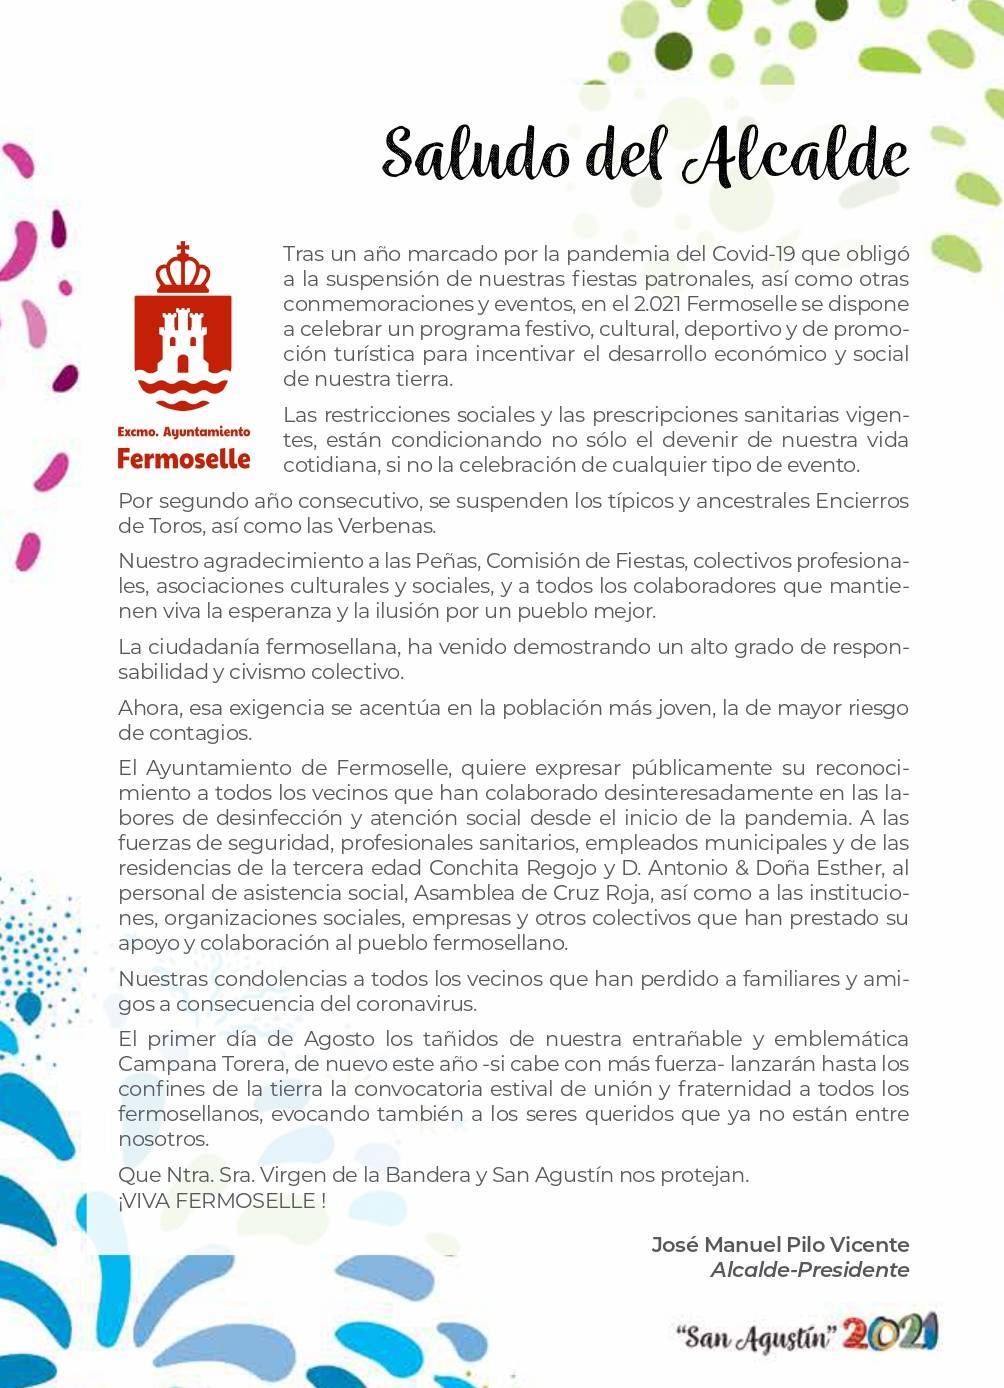 Programa de ferias y fiestas de San Agustín (2021) - Fermoselle (Zamora) 2